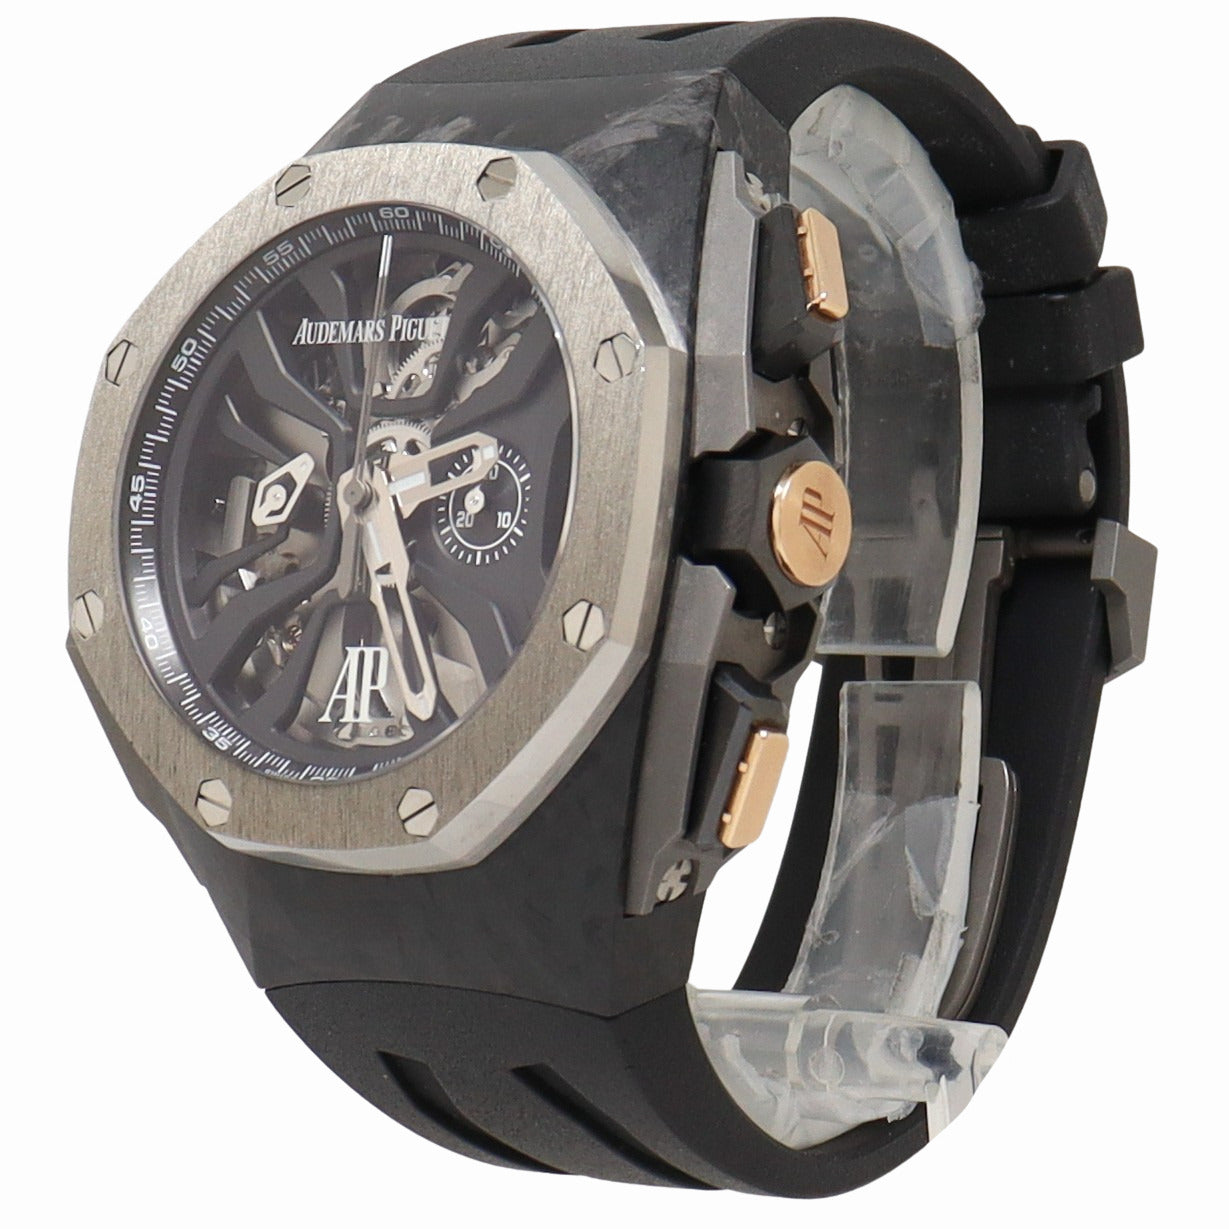 Audemars Piguet Royal Oak Concept Laptimer Michael Schumacher 44mm Forged Carbon Skeleton Dial Watch Reference# 26221FT.OO.D002CA.01 - Happy Jewelers Fine Jewelry Lifetime Warranty